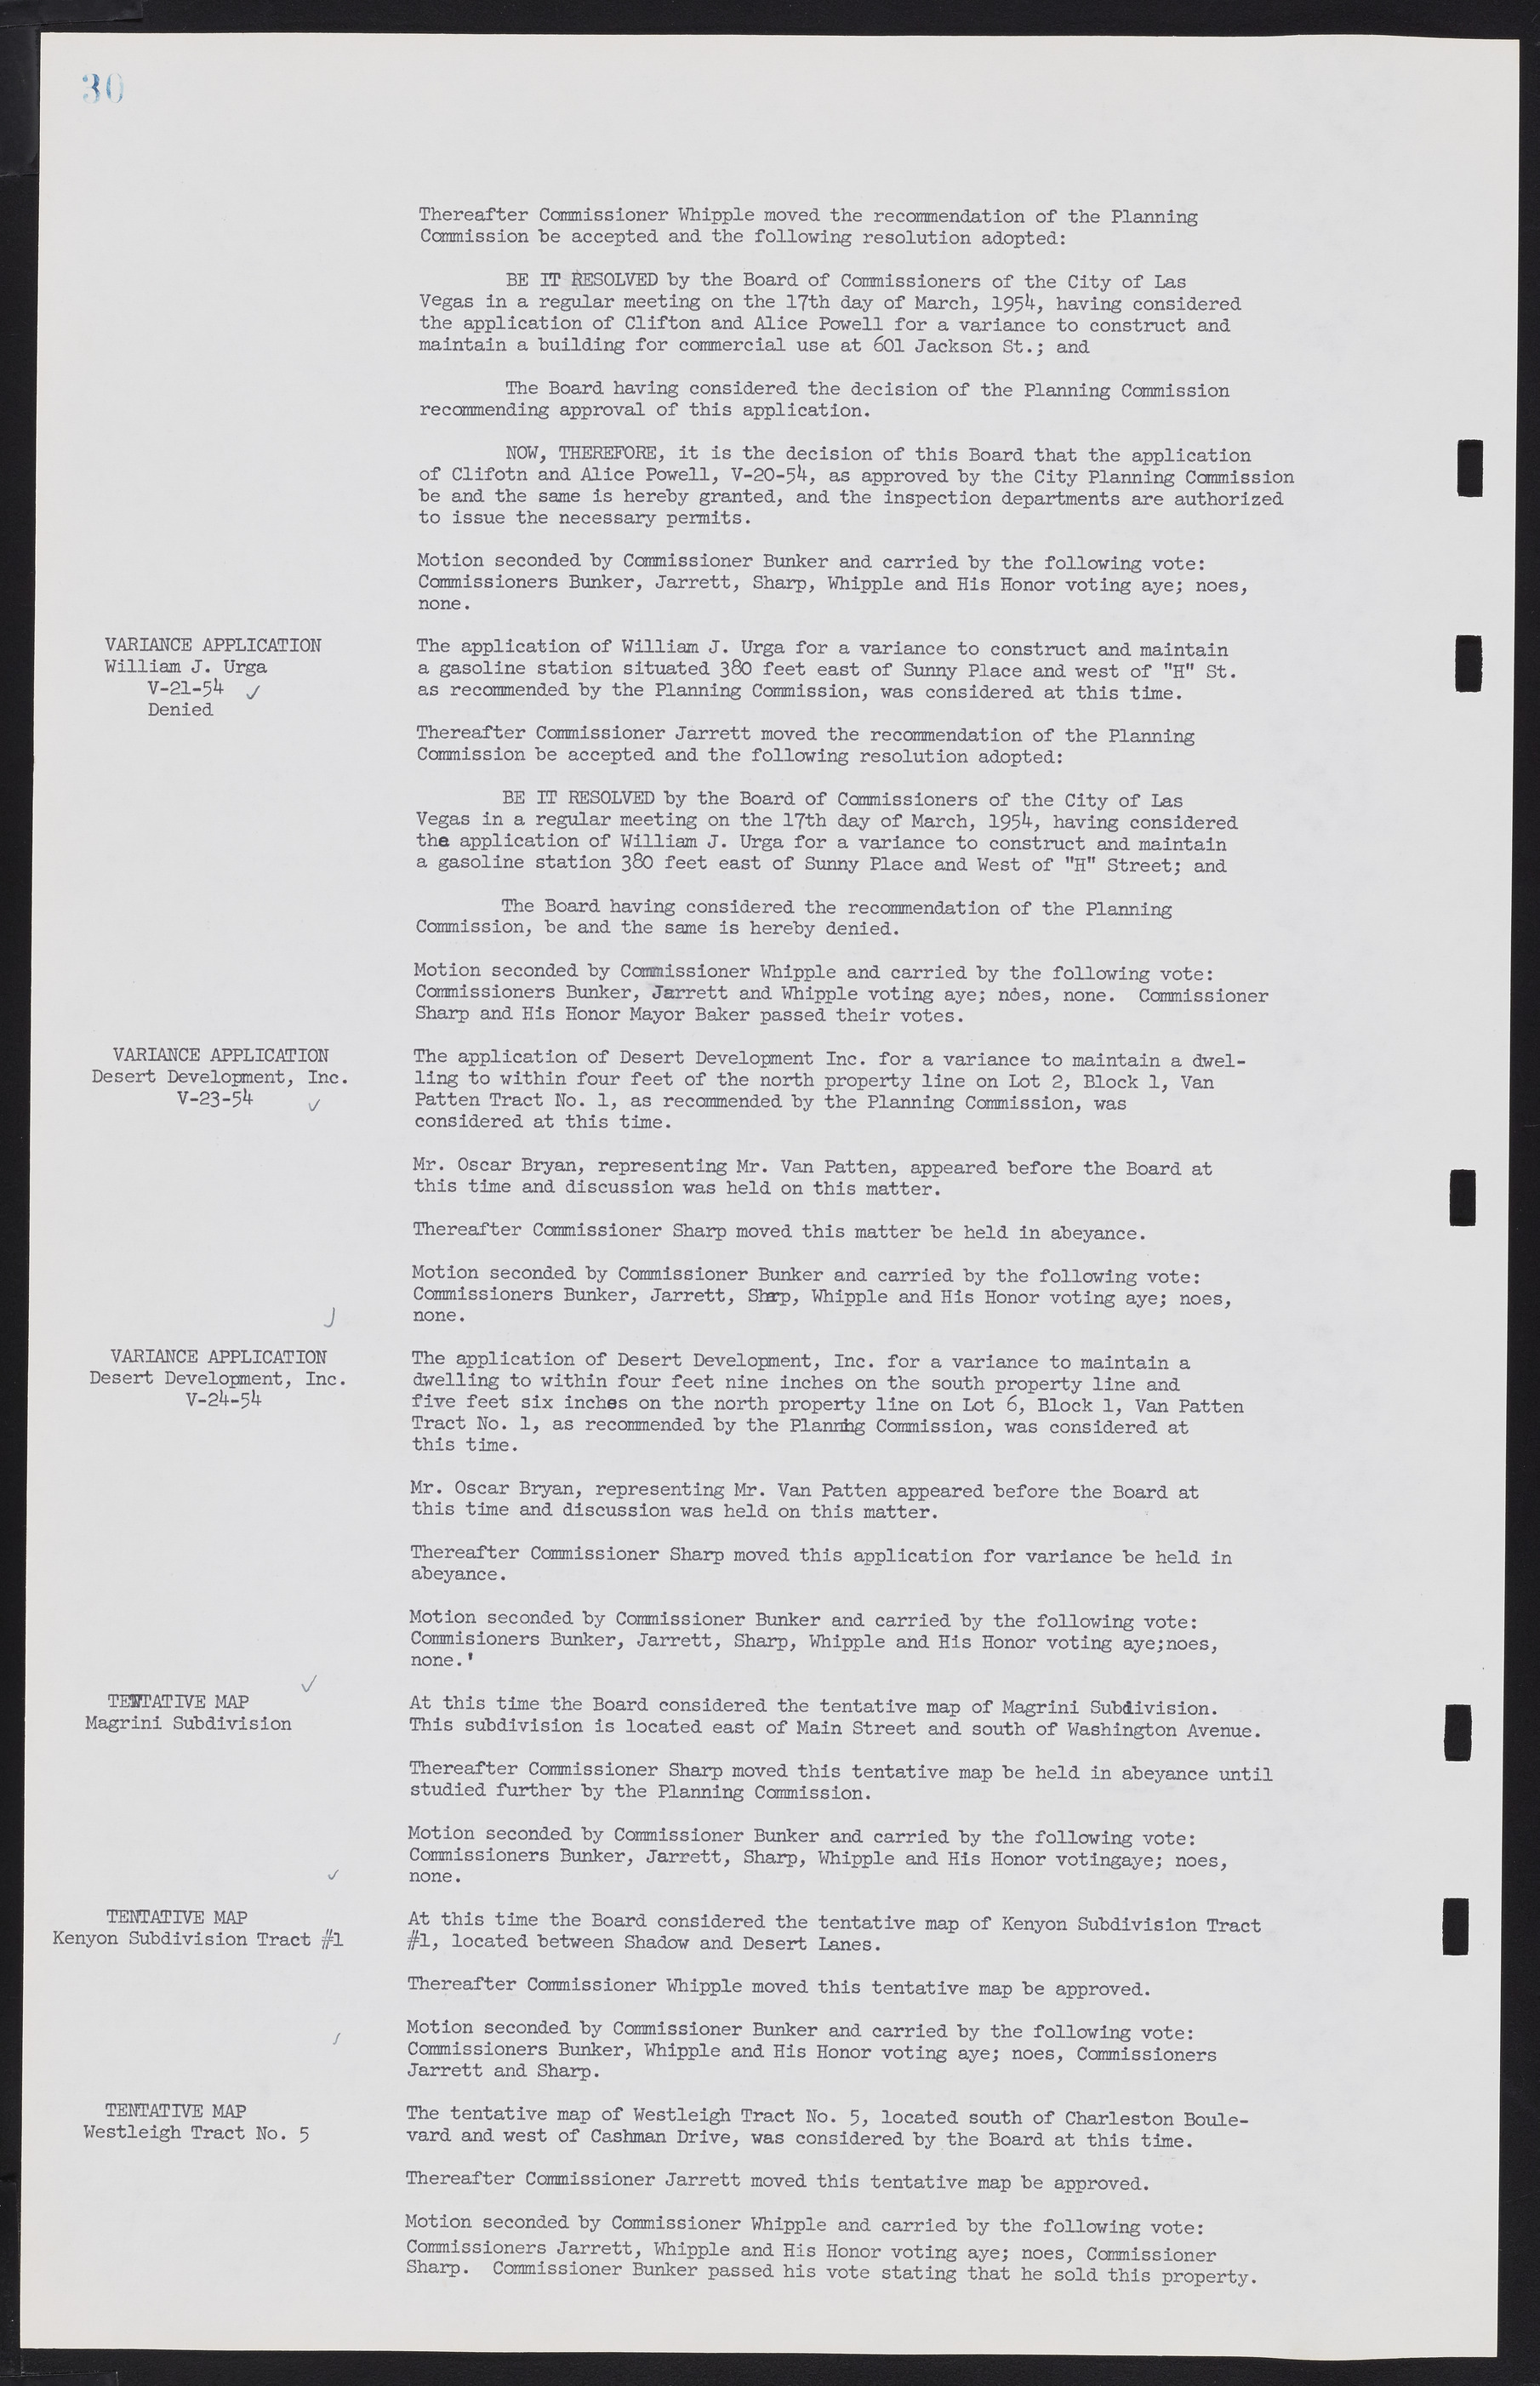 Las Vegas City Commission Minutes, February 17, 1954 to September 21, 1955, lvc000009-34